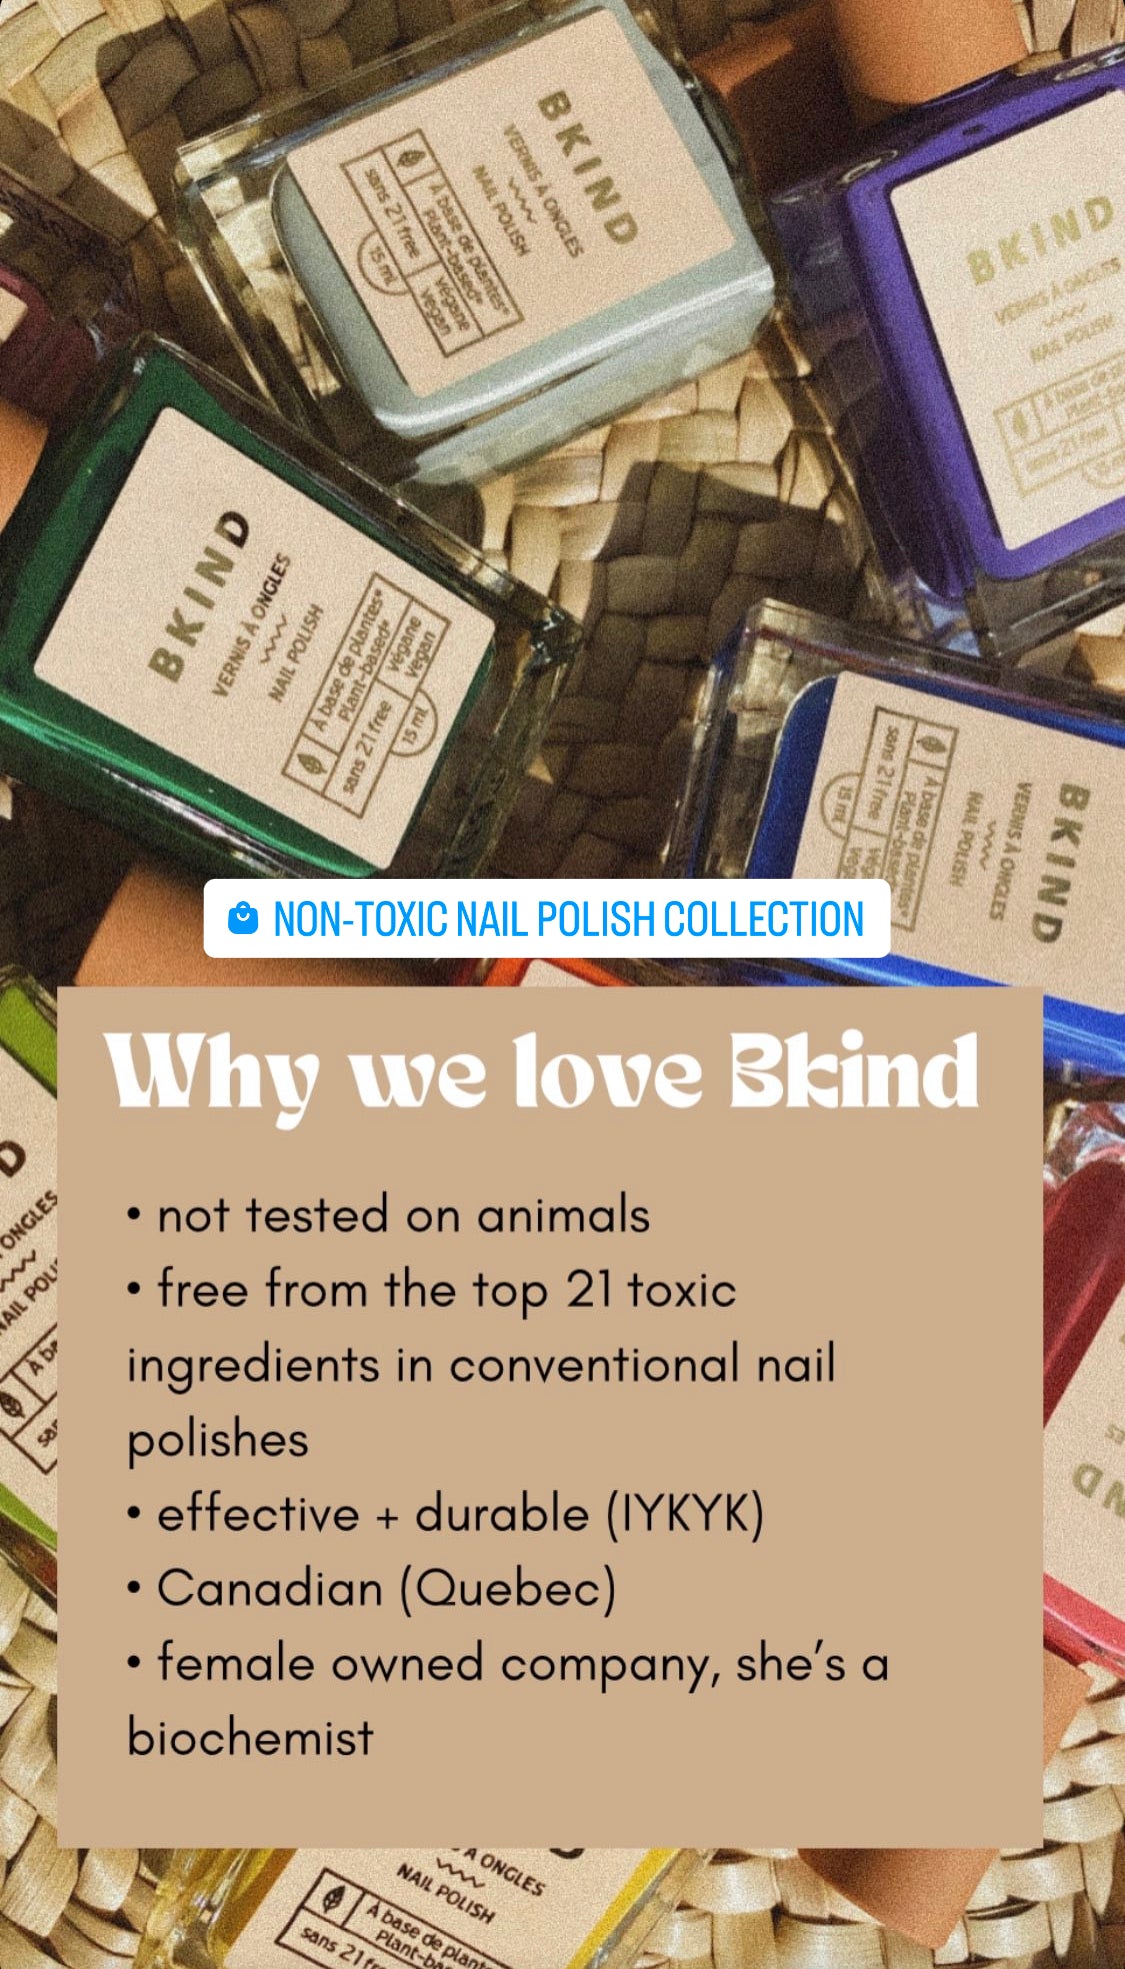 Non-Toxic Nail Polish Collection